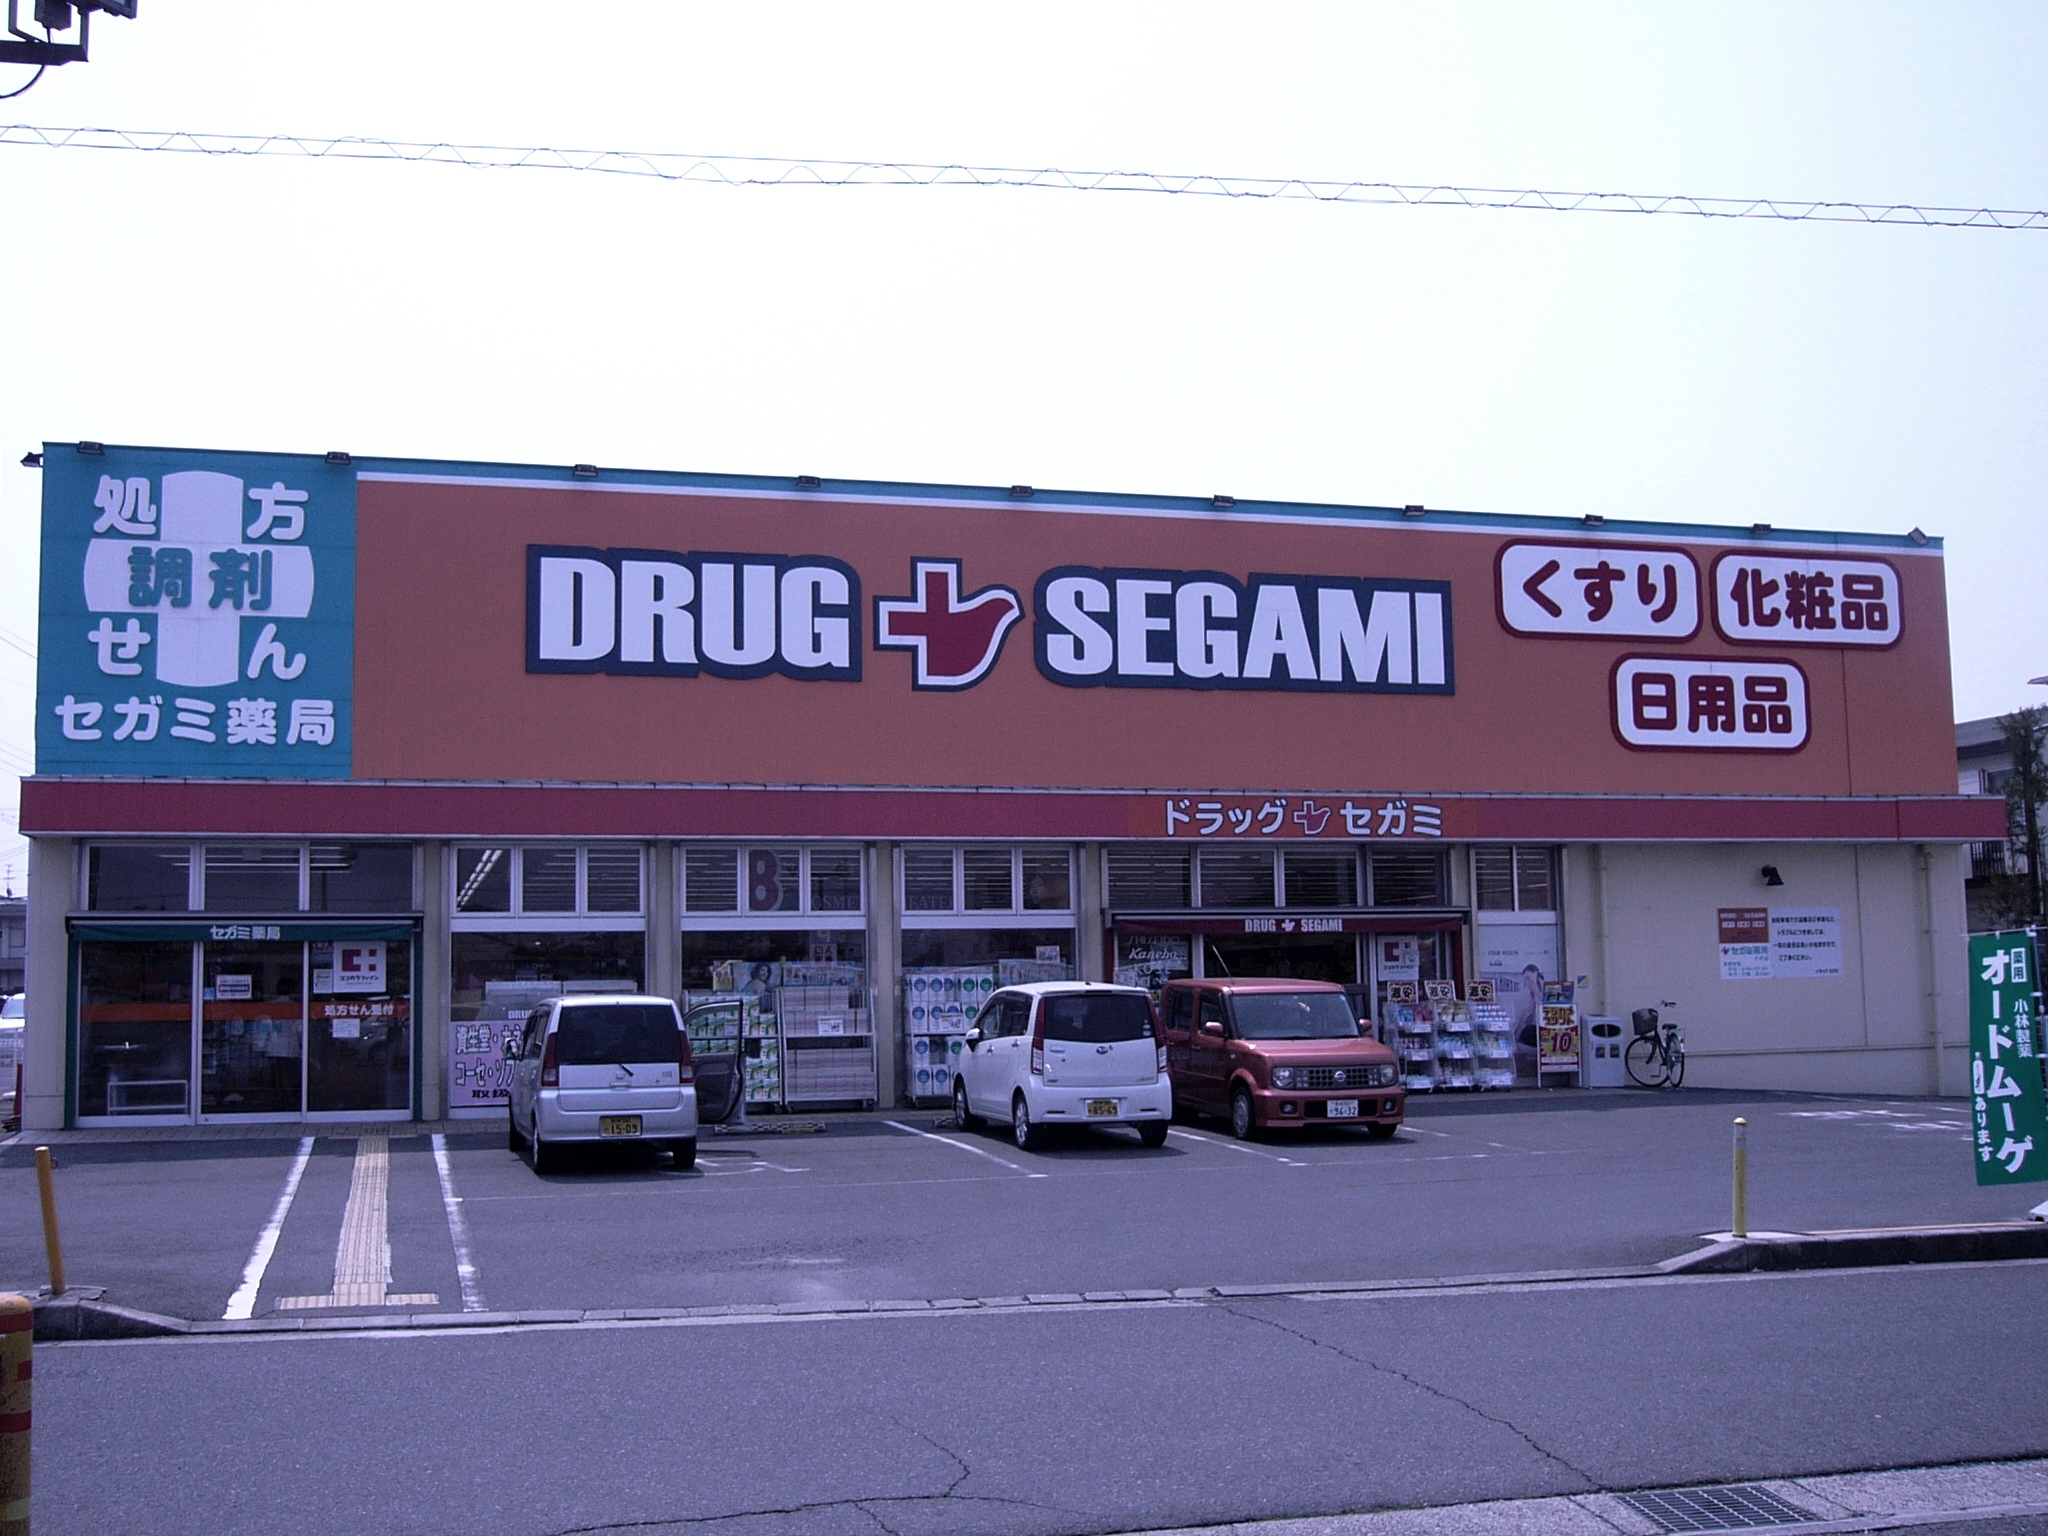 Dorakkusutoa. Drag Segami Yagi shop 534m until (drugstore)